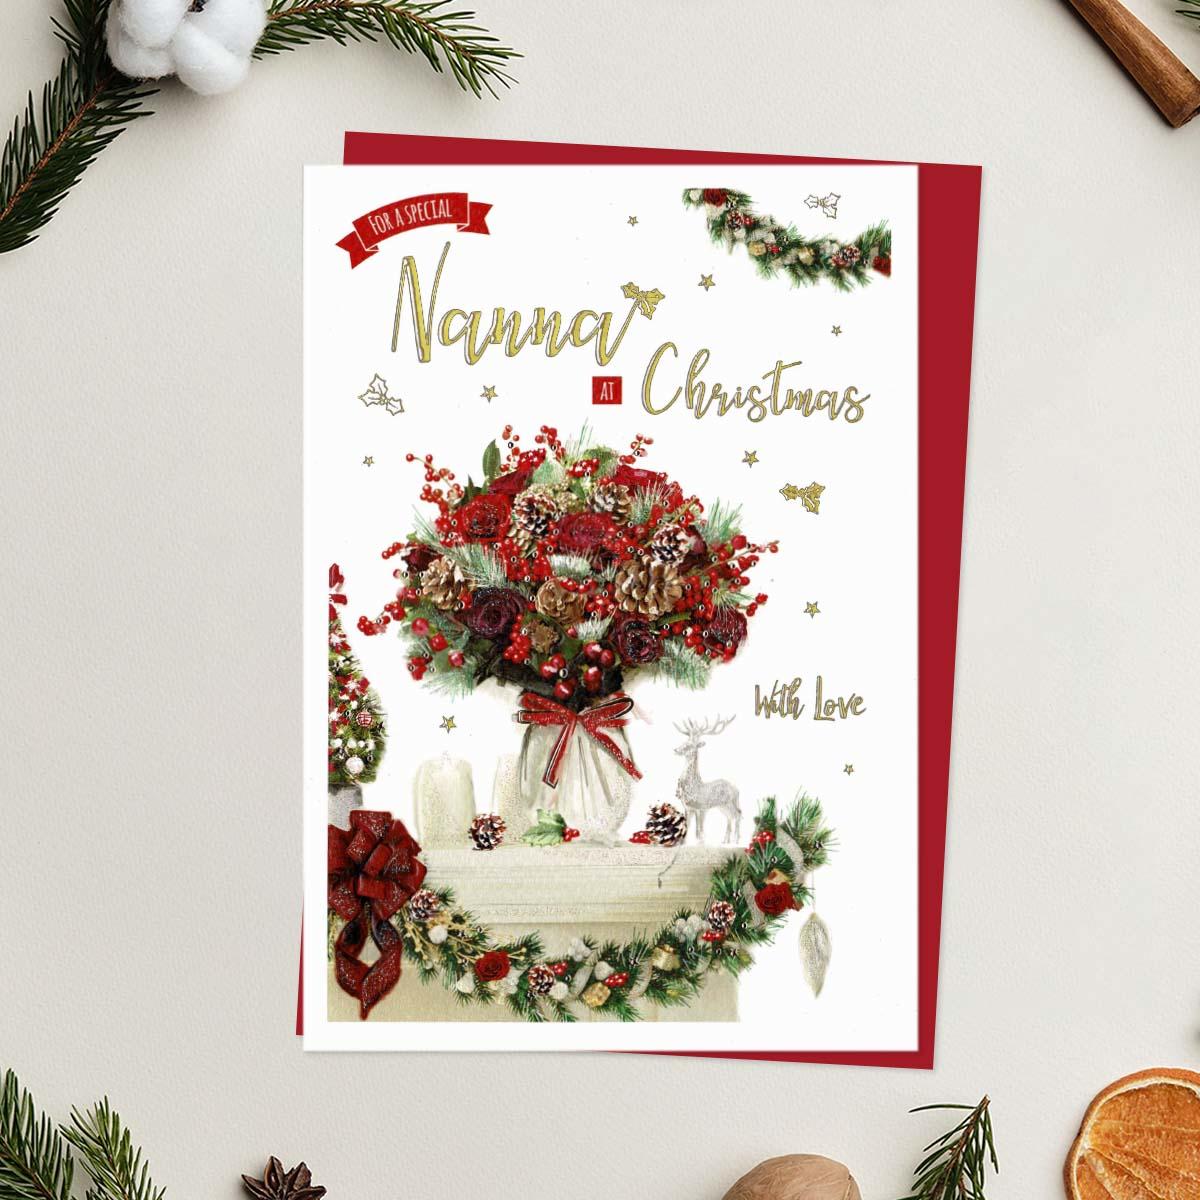 Nanna Christmas Card Alongside Its Red Envelope